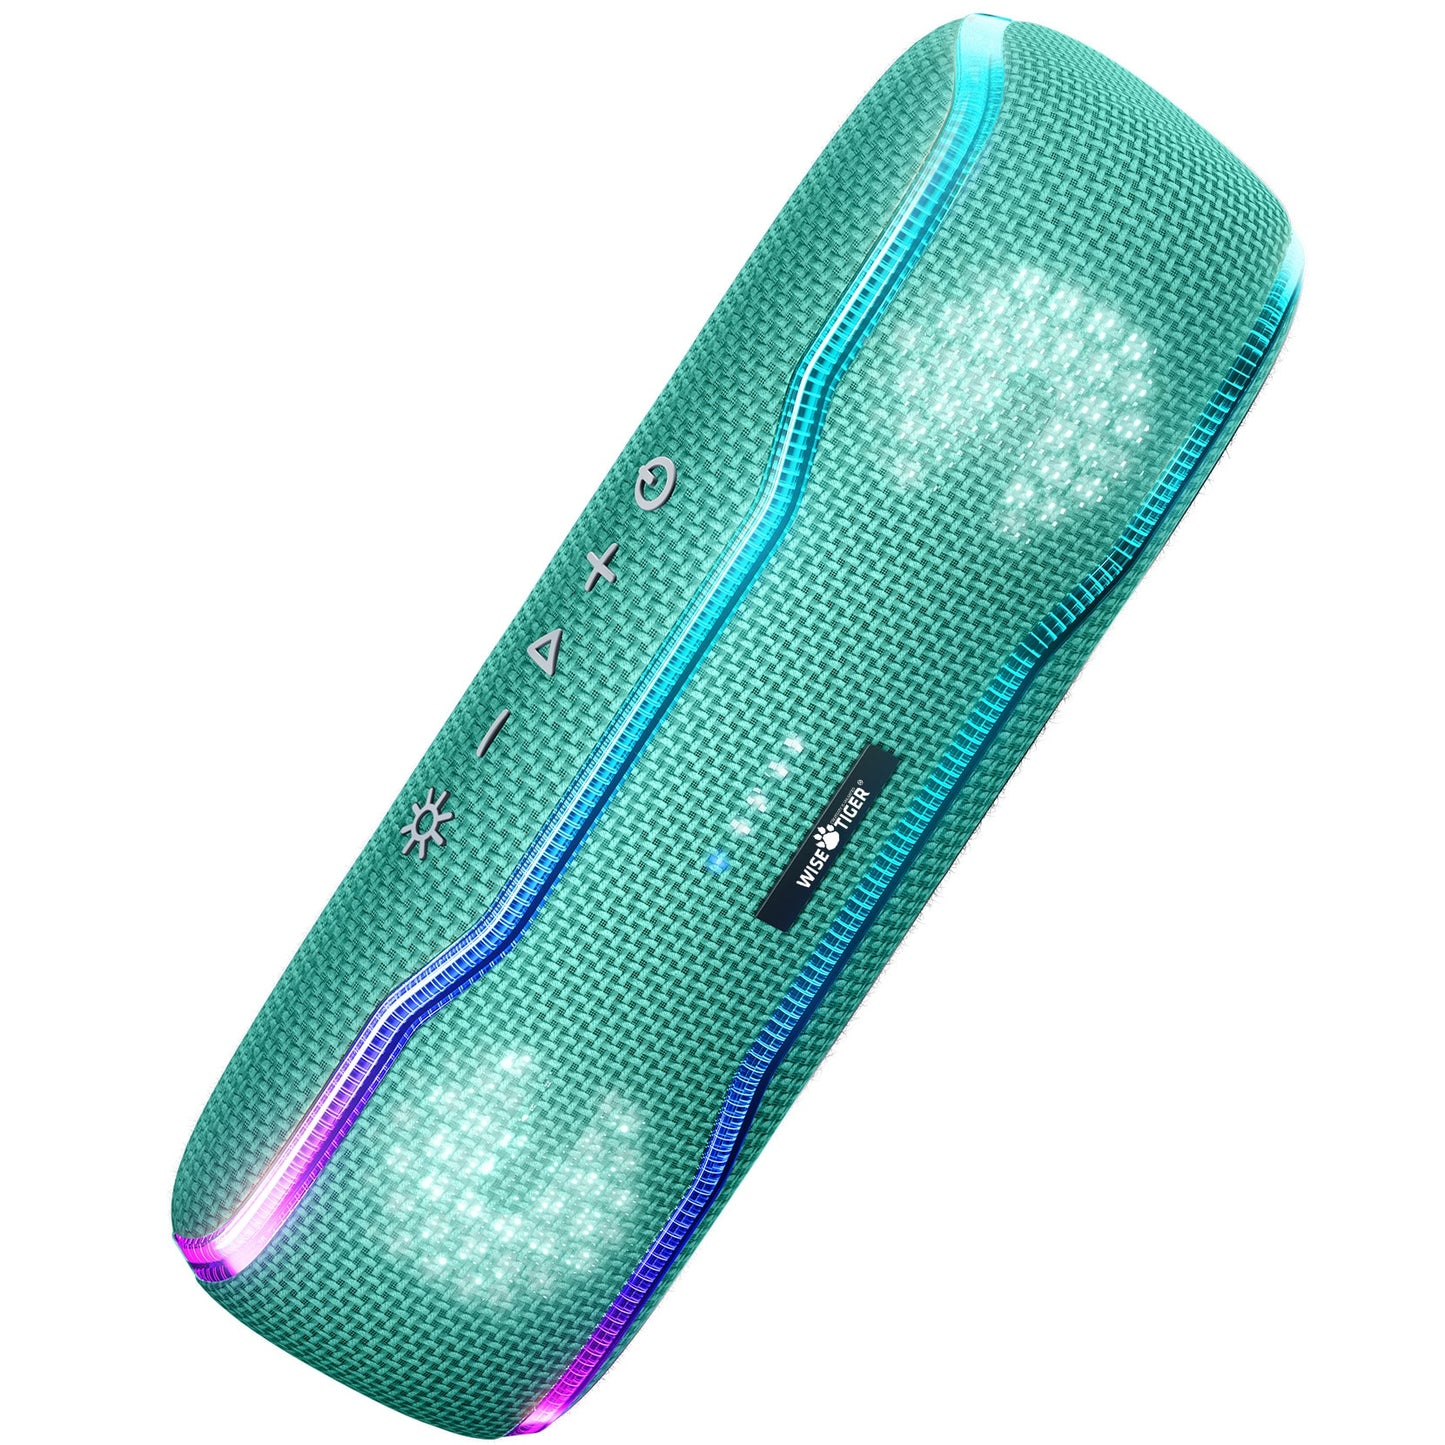 Outdoor Bluetooth Speaker - Waterproof 25W Loudspeaker with Cool EQ Lights